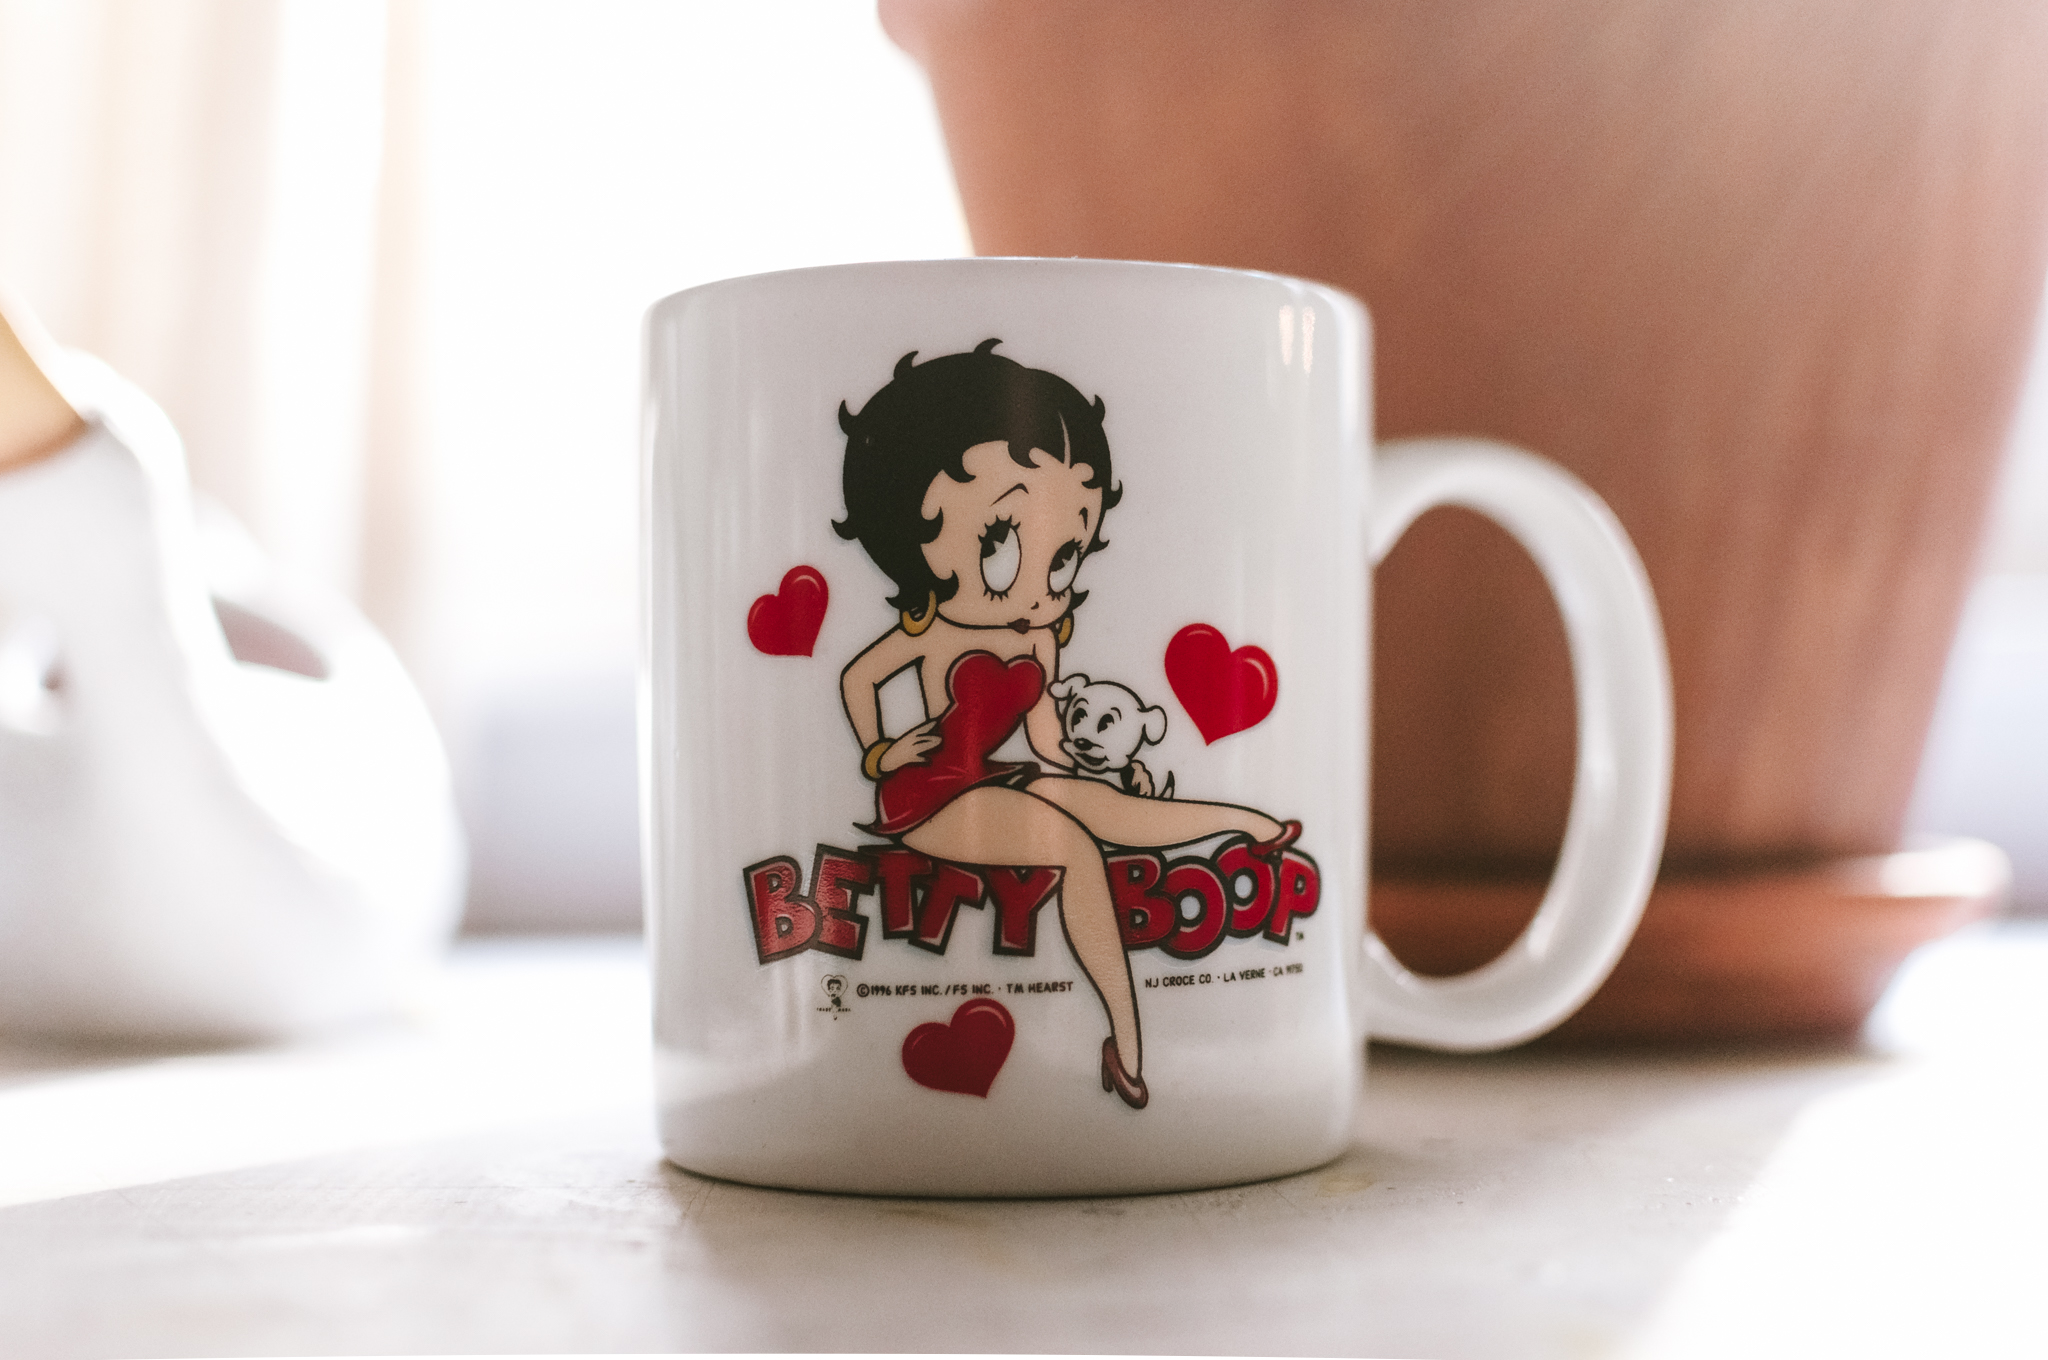 Betty Boop “The Original” 11oz. Mug - Fashion Corner LA